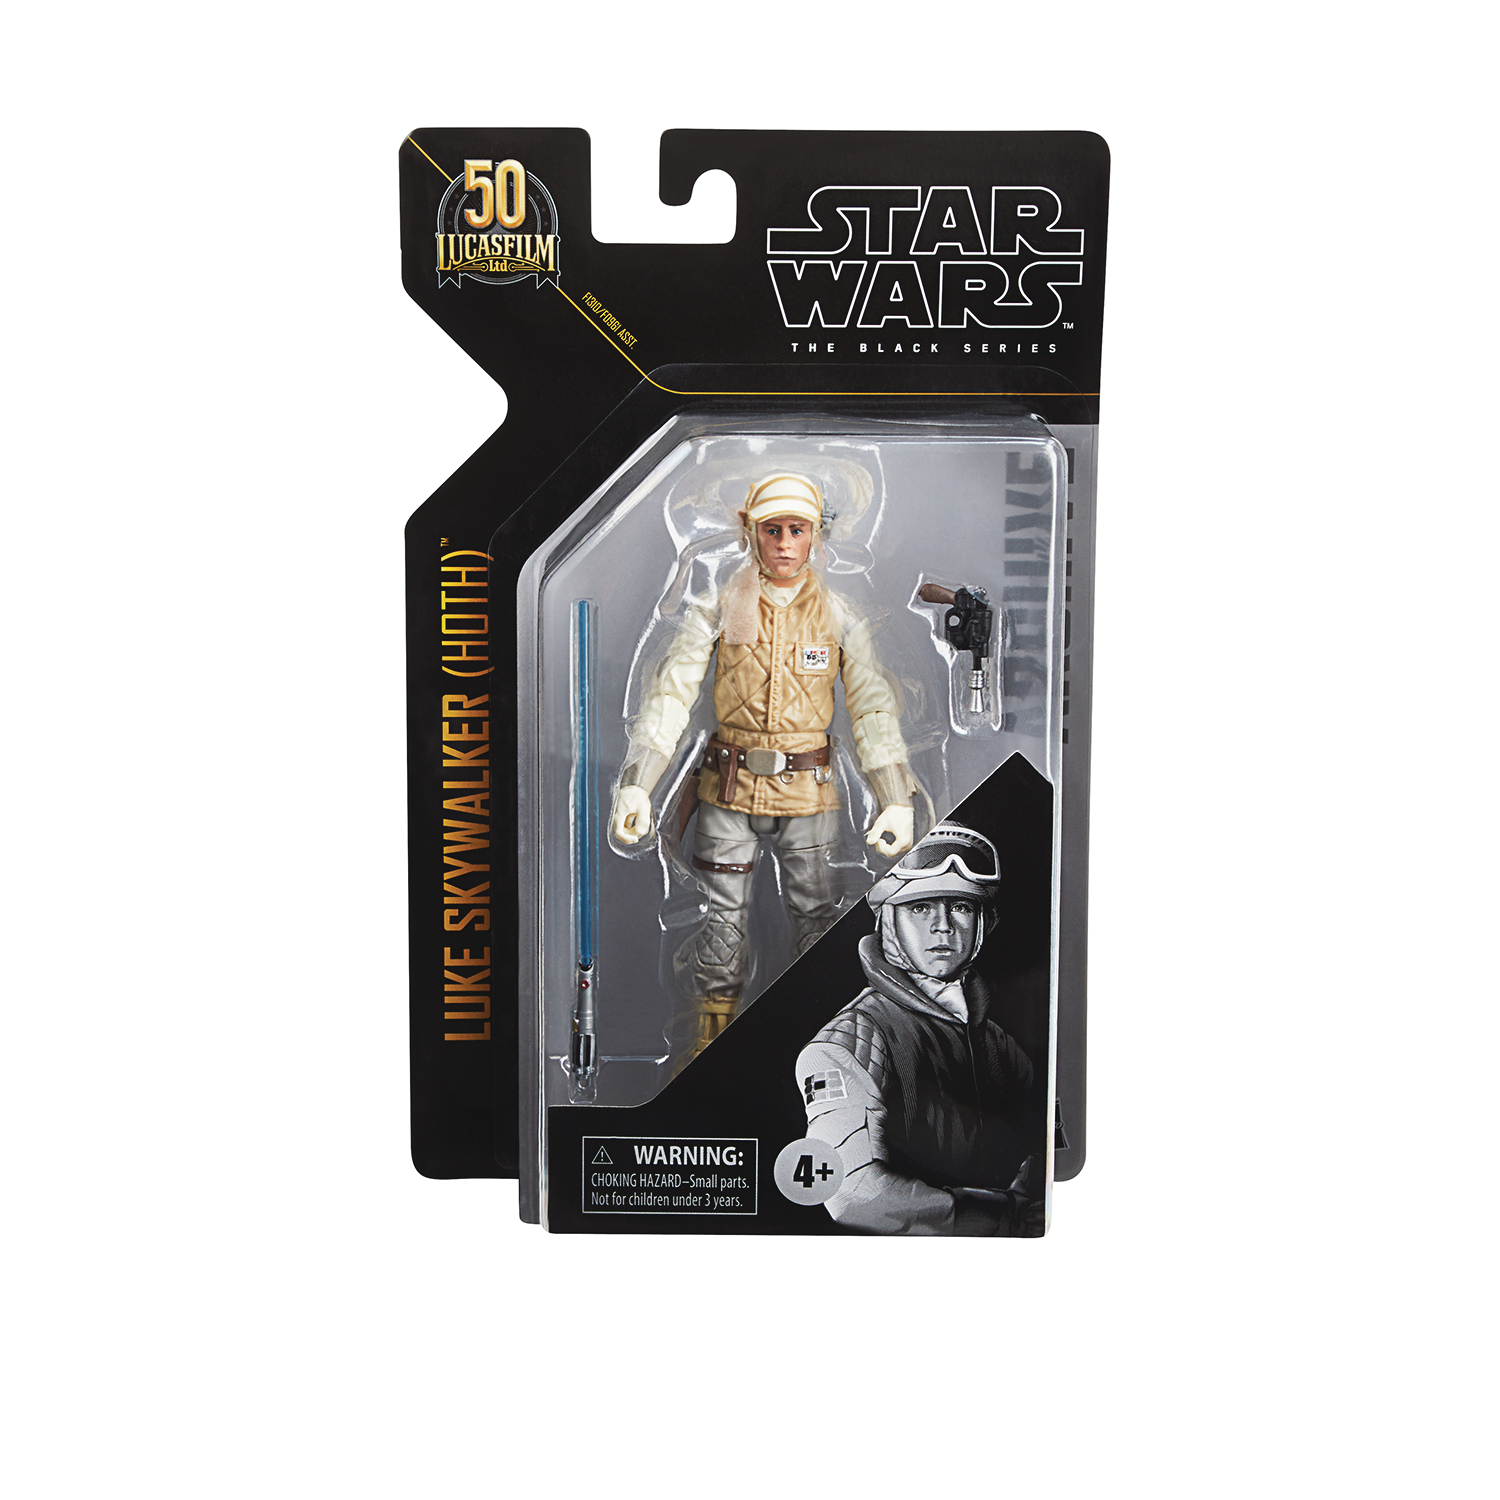 Star Wars Black Archives 6 Inch Hoth Luke Skywalker Action Figure Case